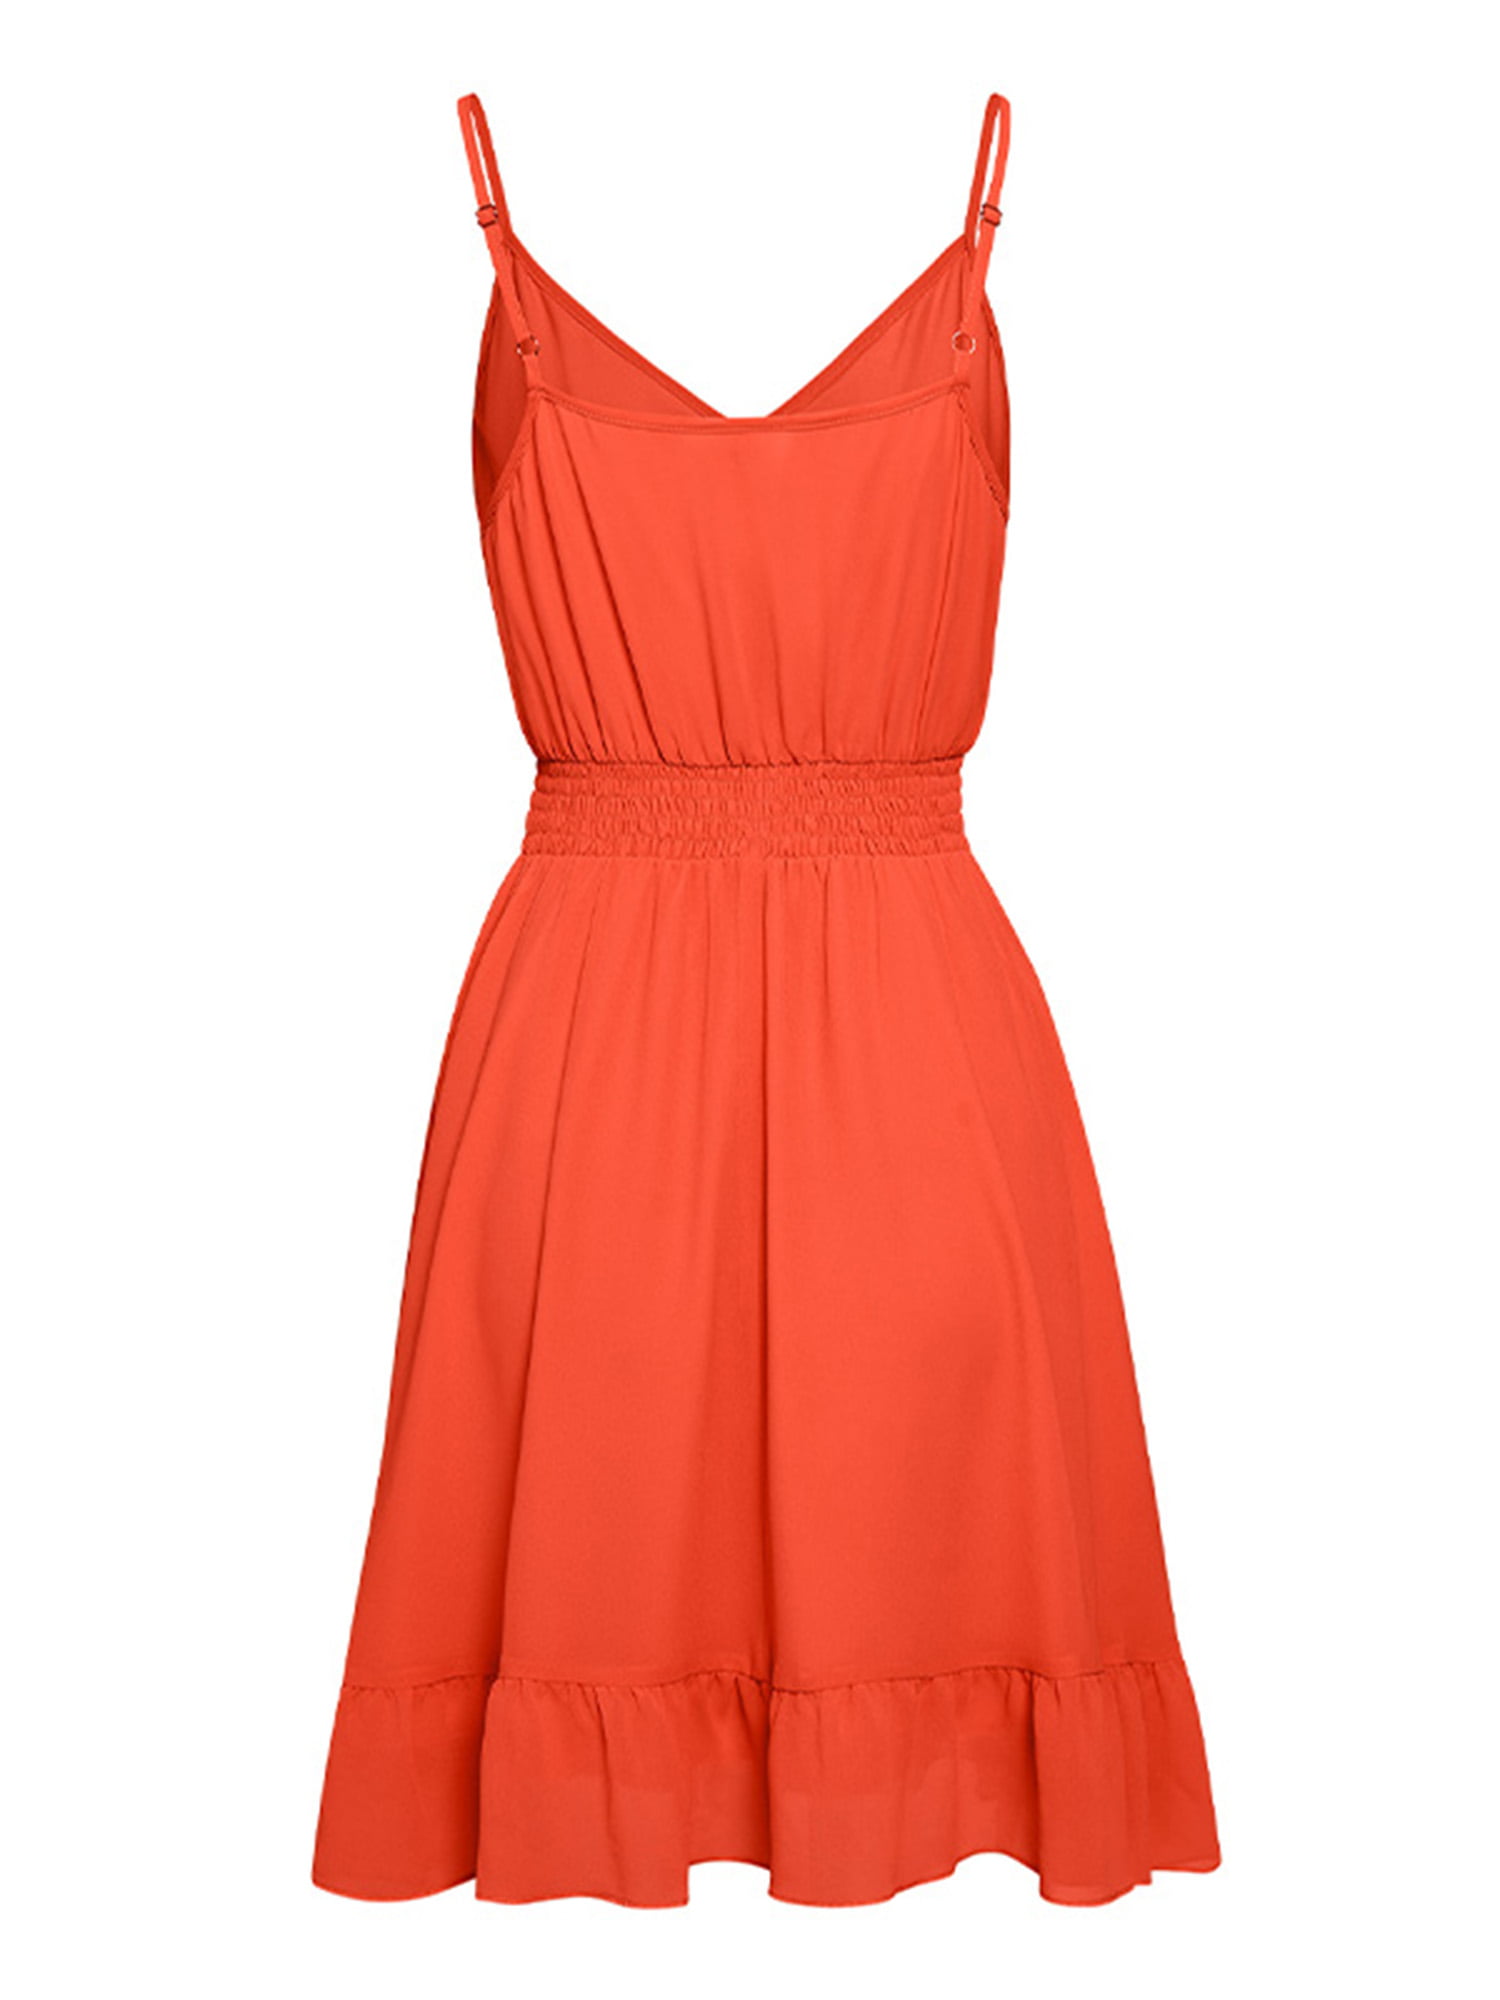 Sanviglor Ladies Long Dress Spaghetti Strap Summer Beach Sundress V Neck  Midi Dresses Irregular Hem Party LQ269-lv XL 